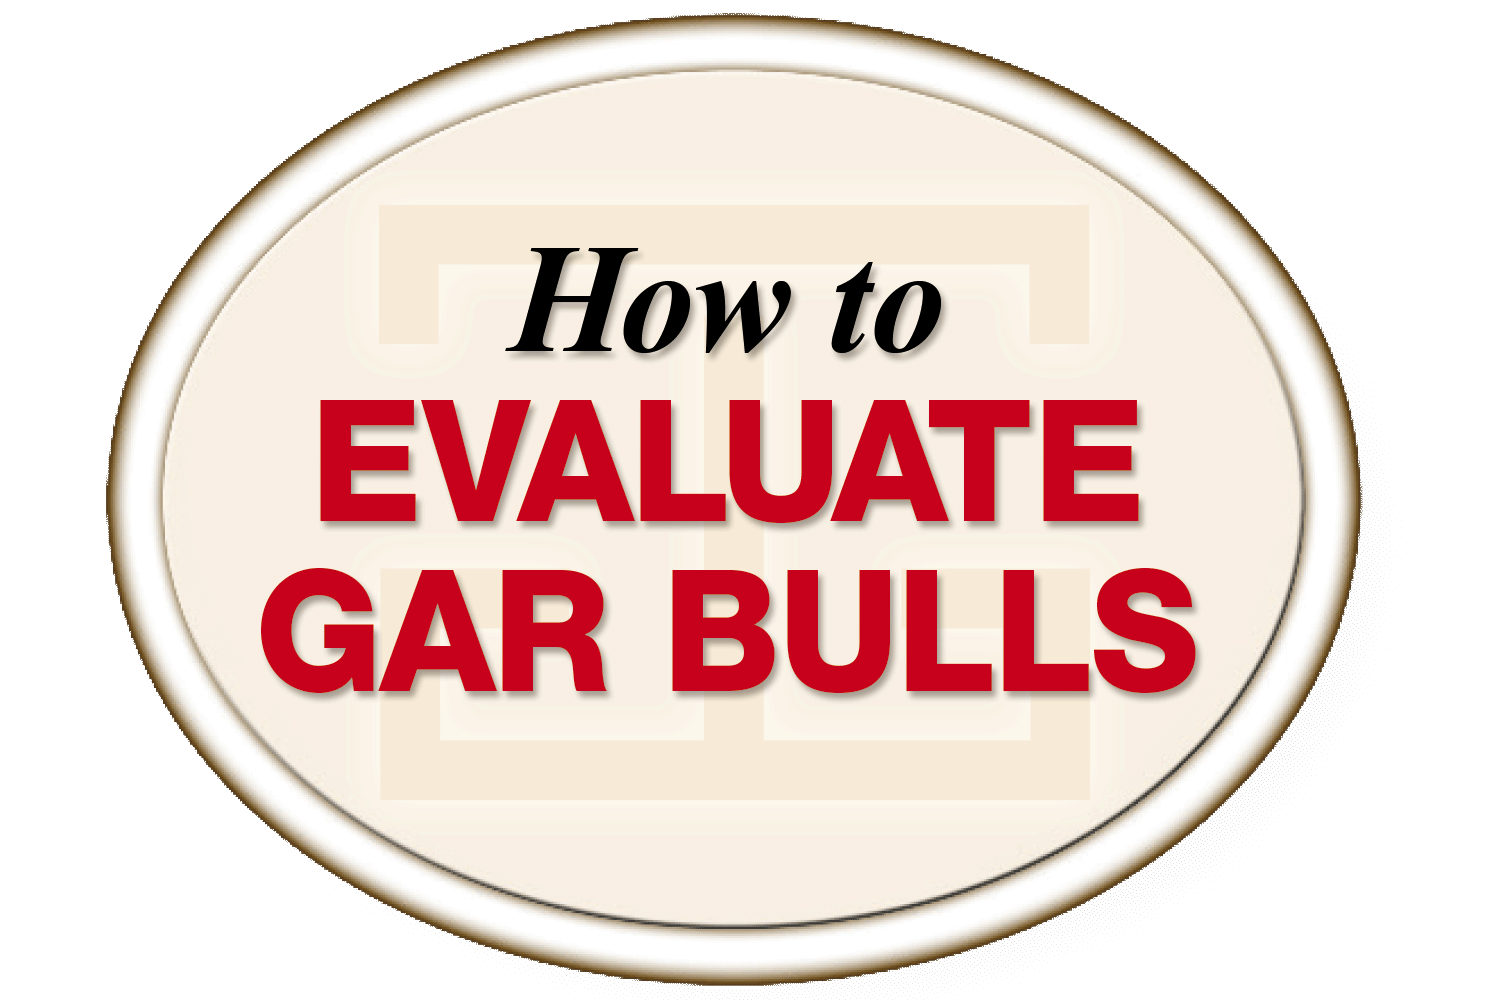 How to Evaluate Gardiner Bulls